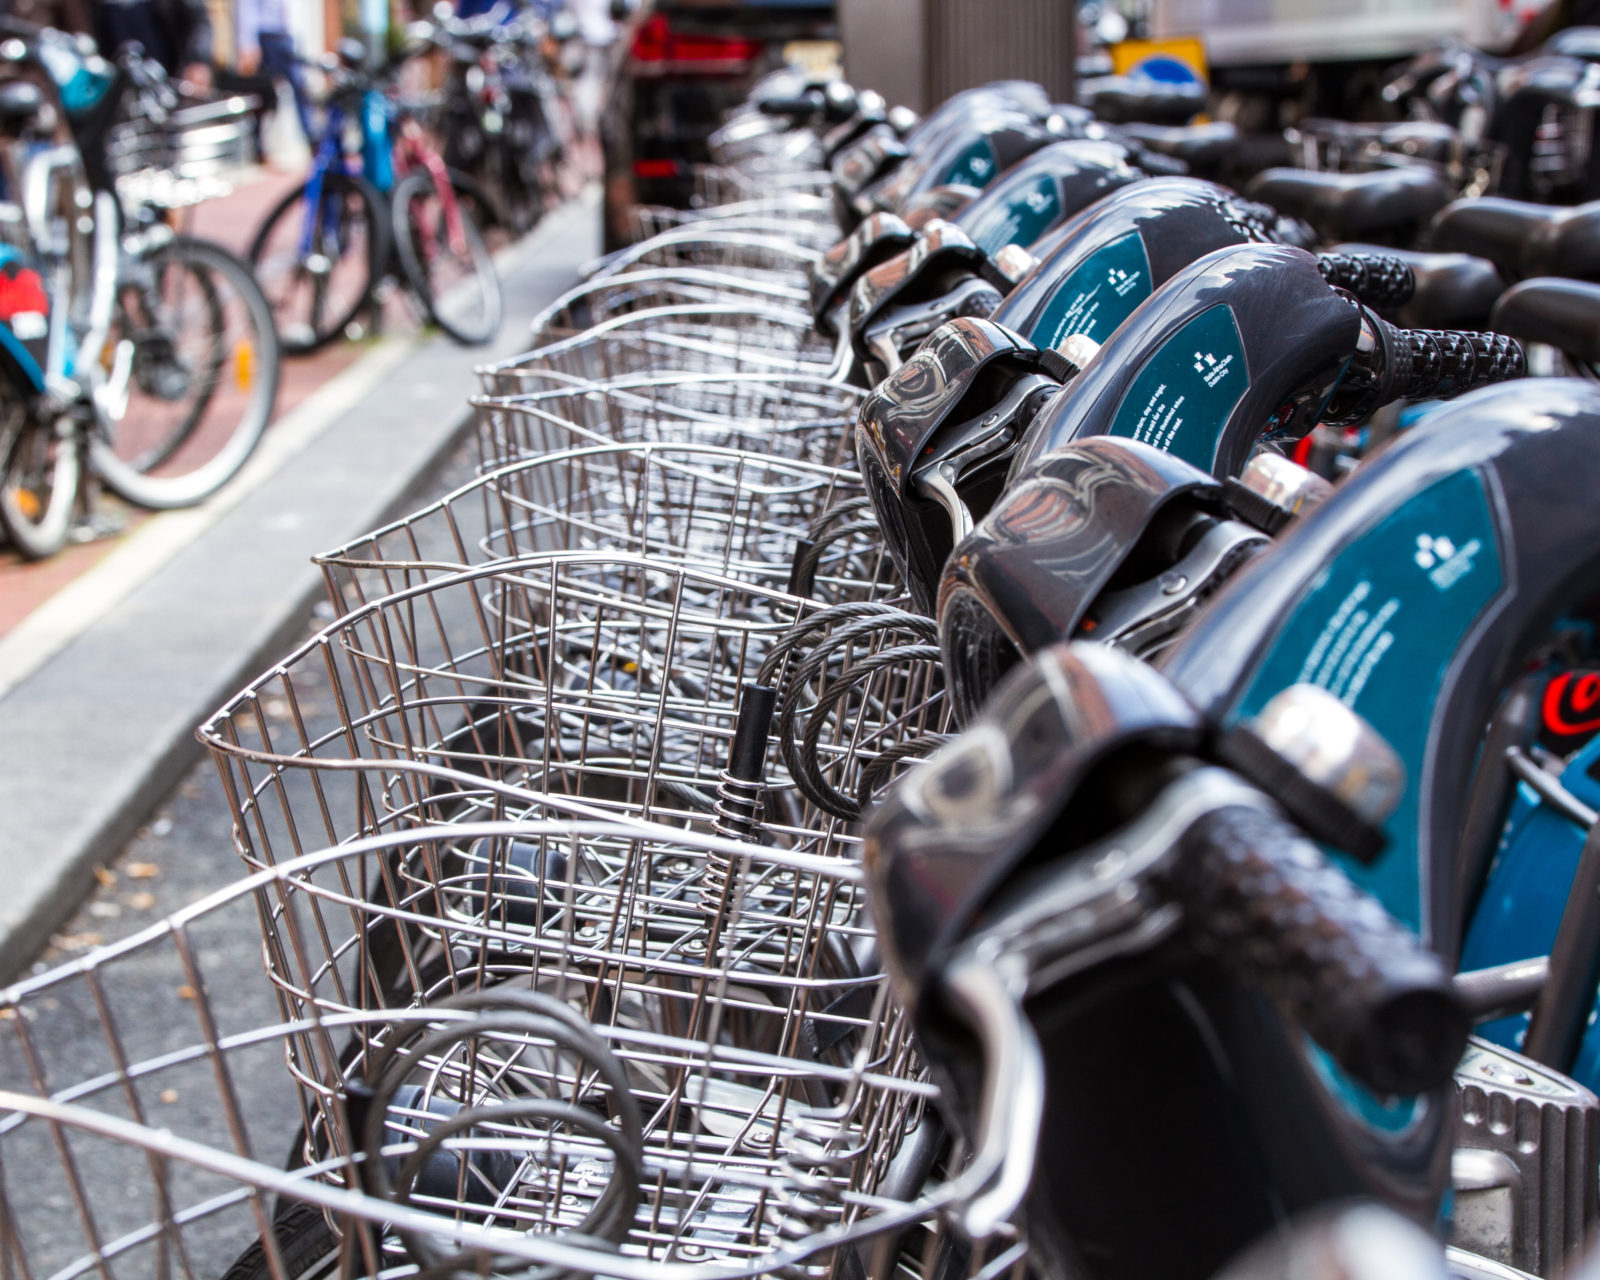 Rent A Bike - baskets and handlebars - in Dublin Ireland